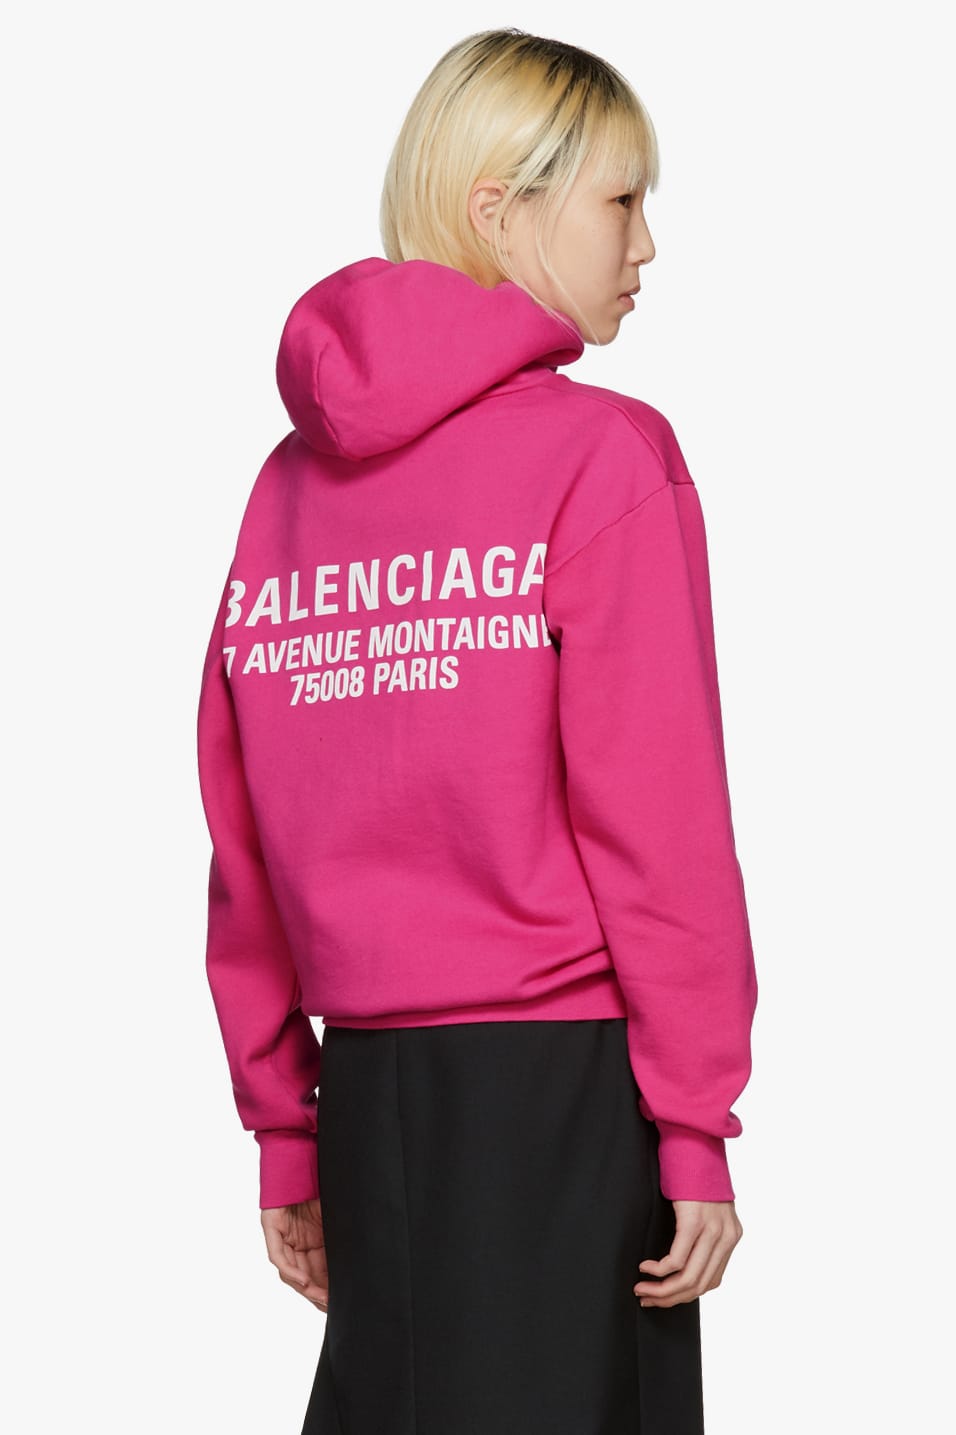 balenciaga pink hoodie